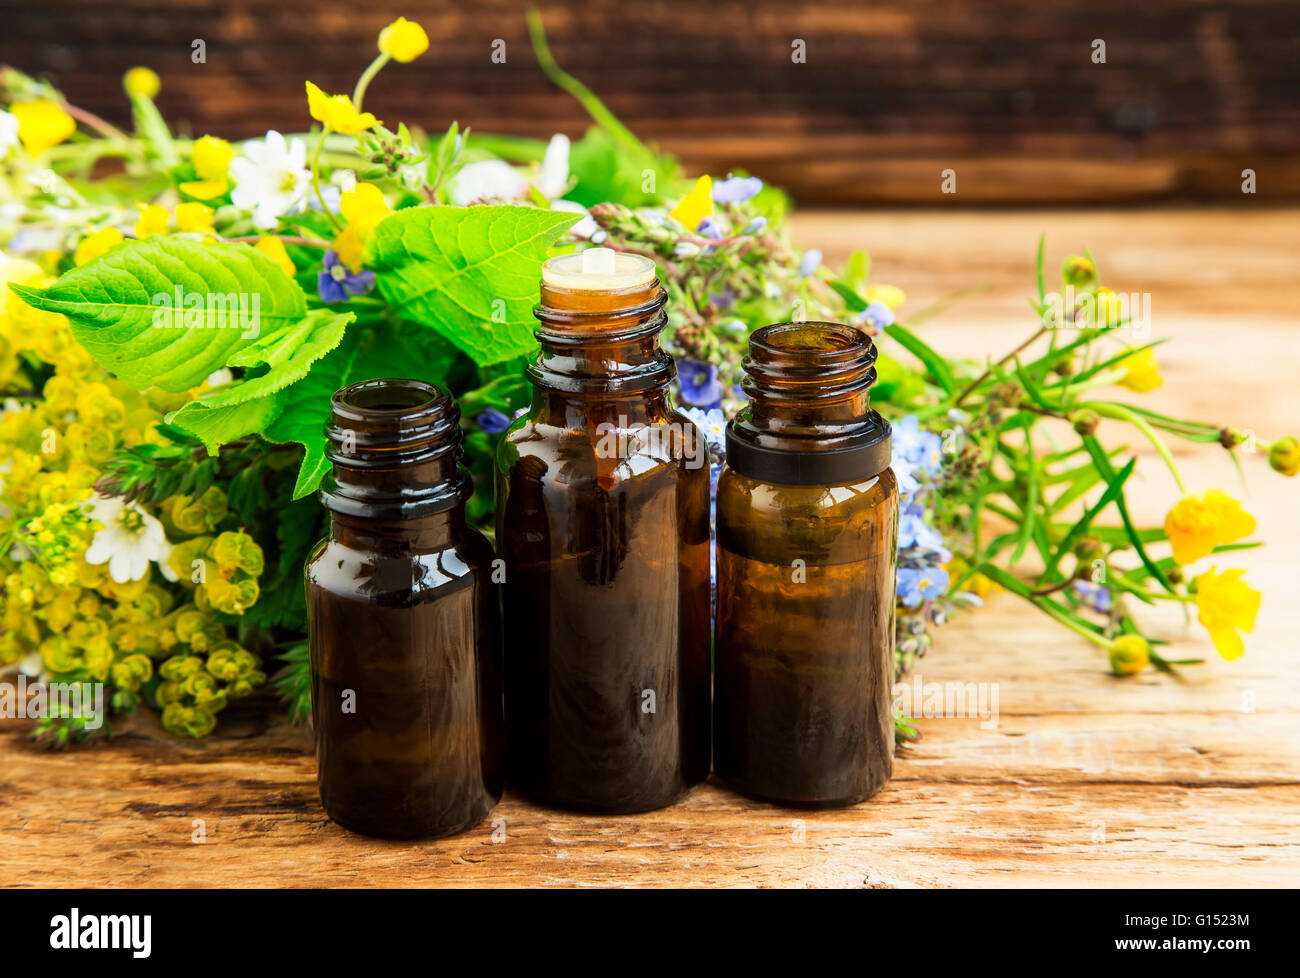 Alternative herbal medicine with medicinal plants essence bottles Stock Photo